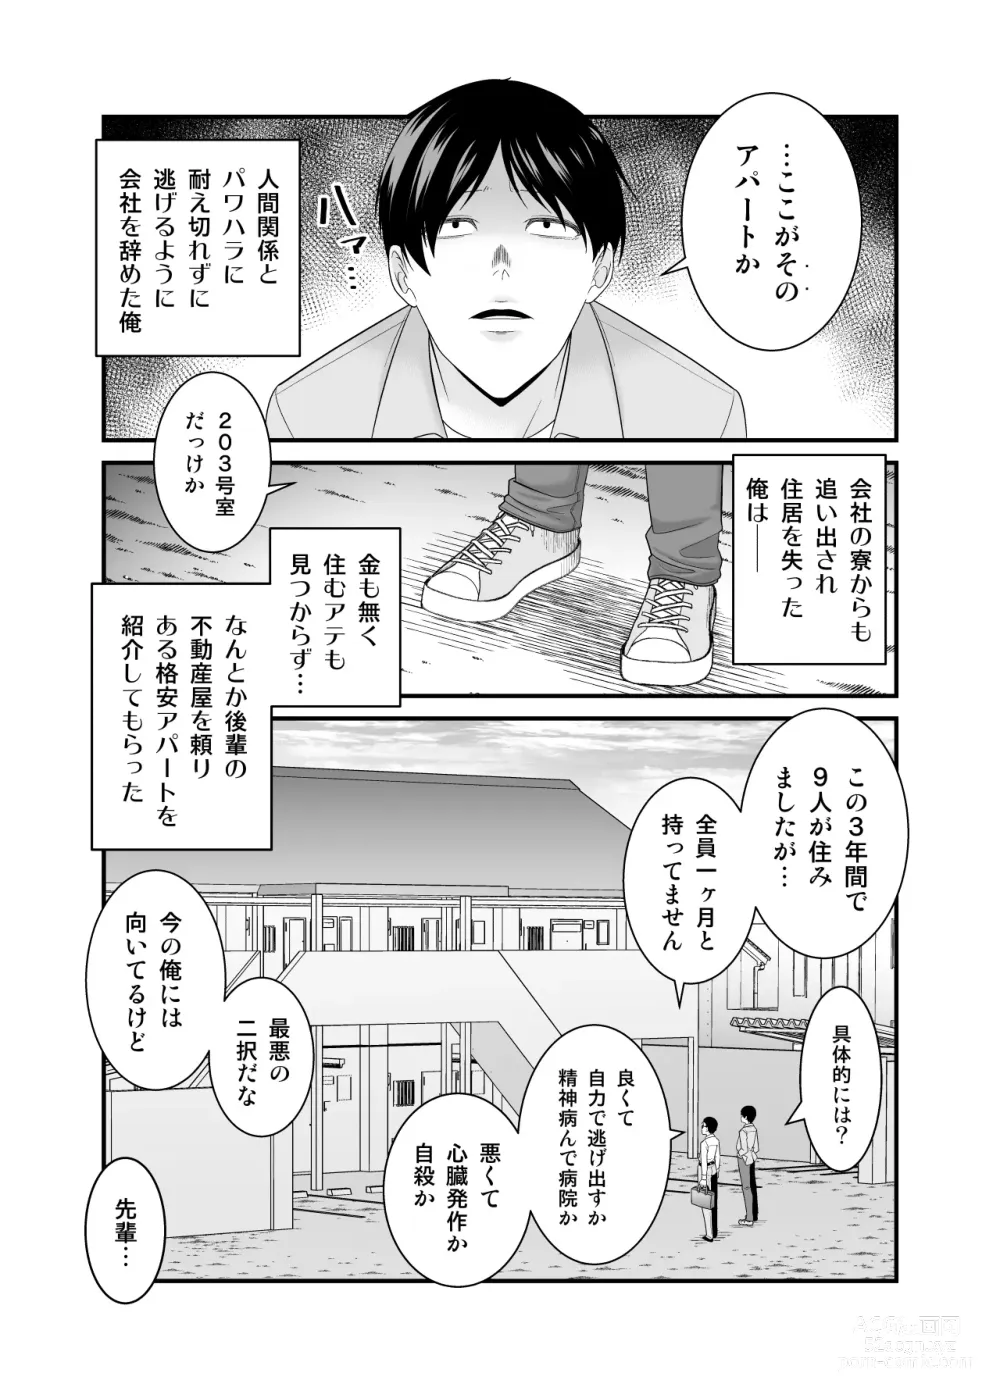 Page 2 of doujinshi ヤバい事故物件に女幽霊が出たけど無職底辺の俺はセックスしまくる